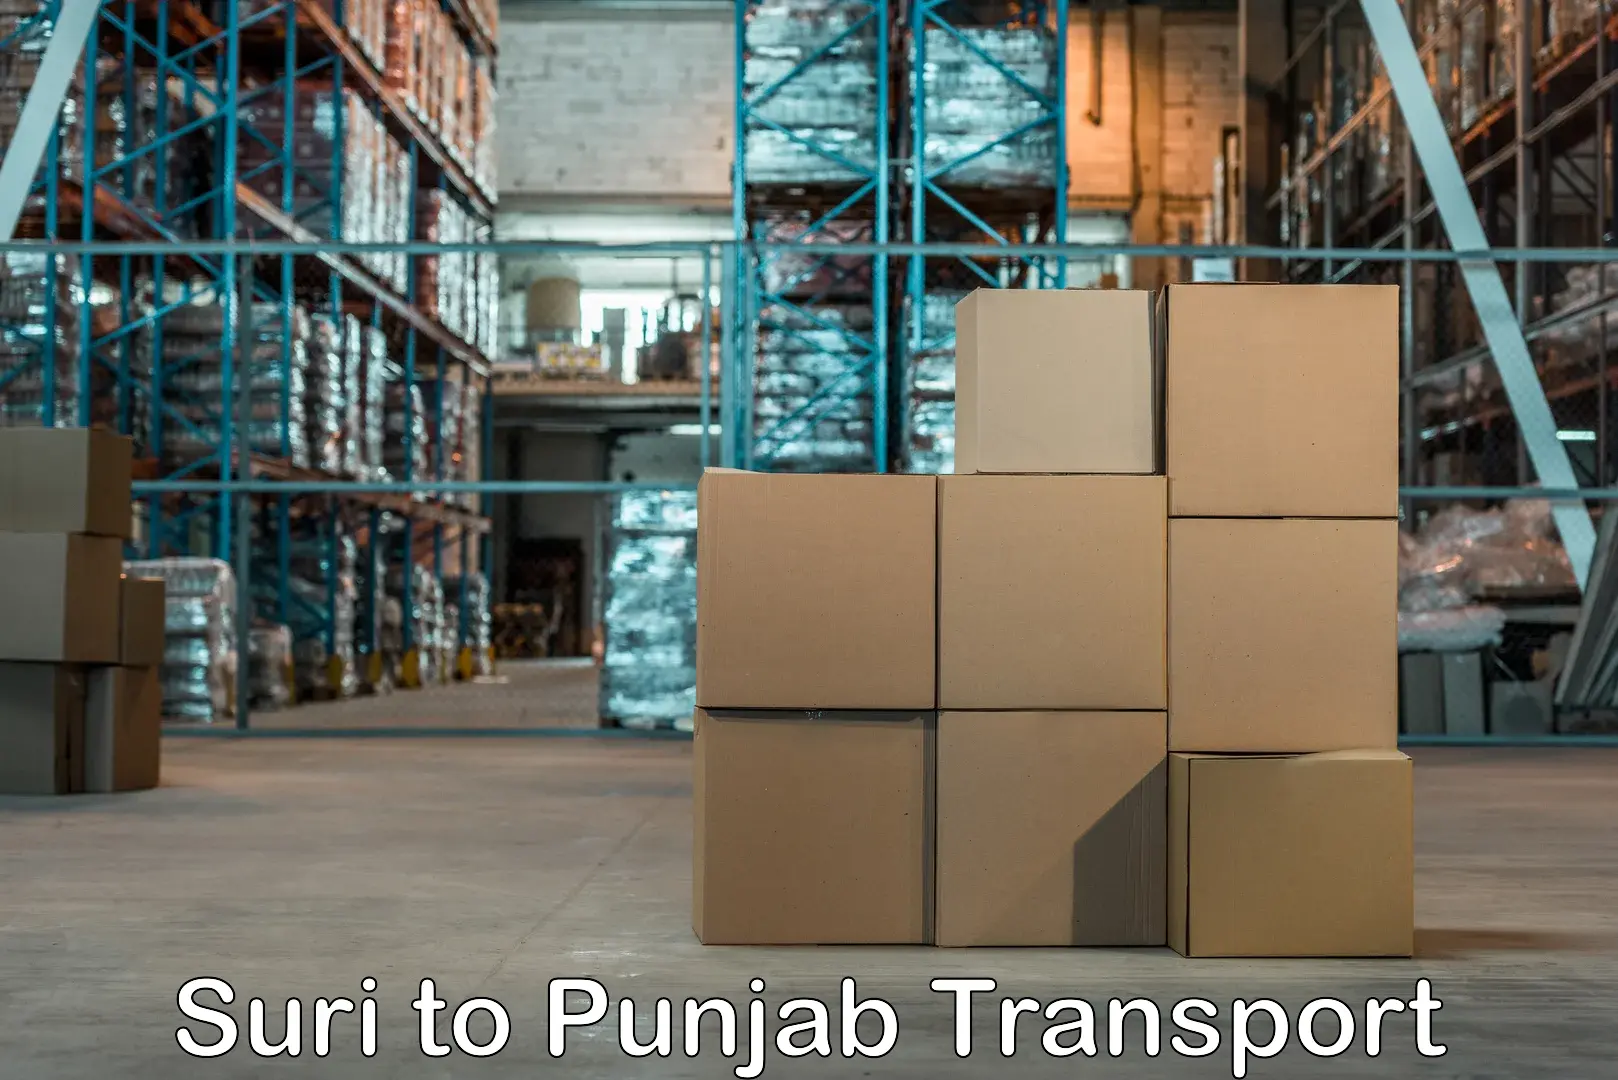 Goods delivery service Suri to Punjab